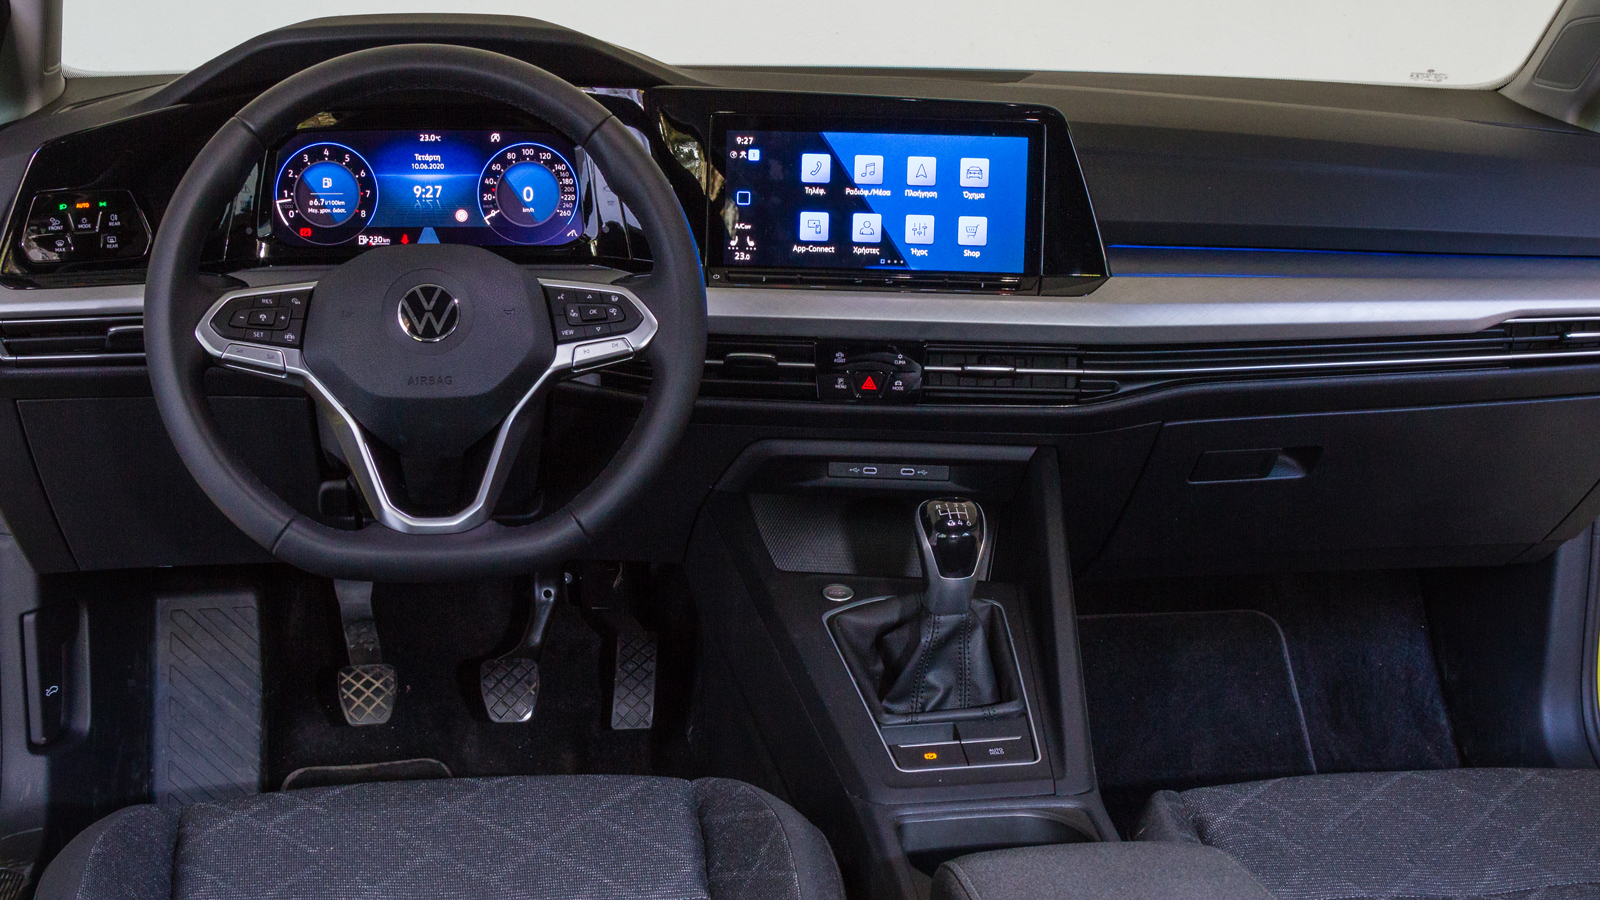 Hyundai i30 120ps VS Volkswagen Golf 130ps. Ποιο ξεχωρίζει σε εξοπλισμό ασφαλείας και άνεσης;